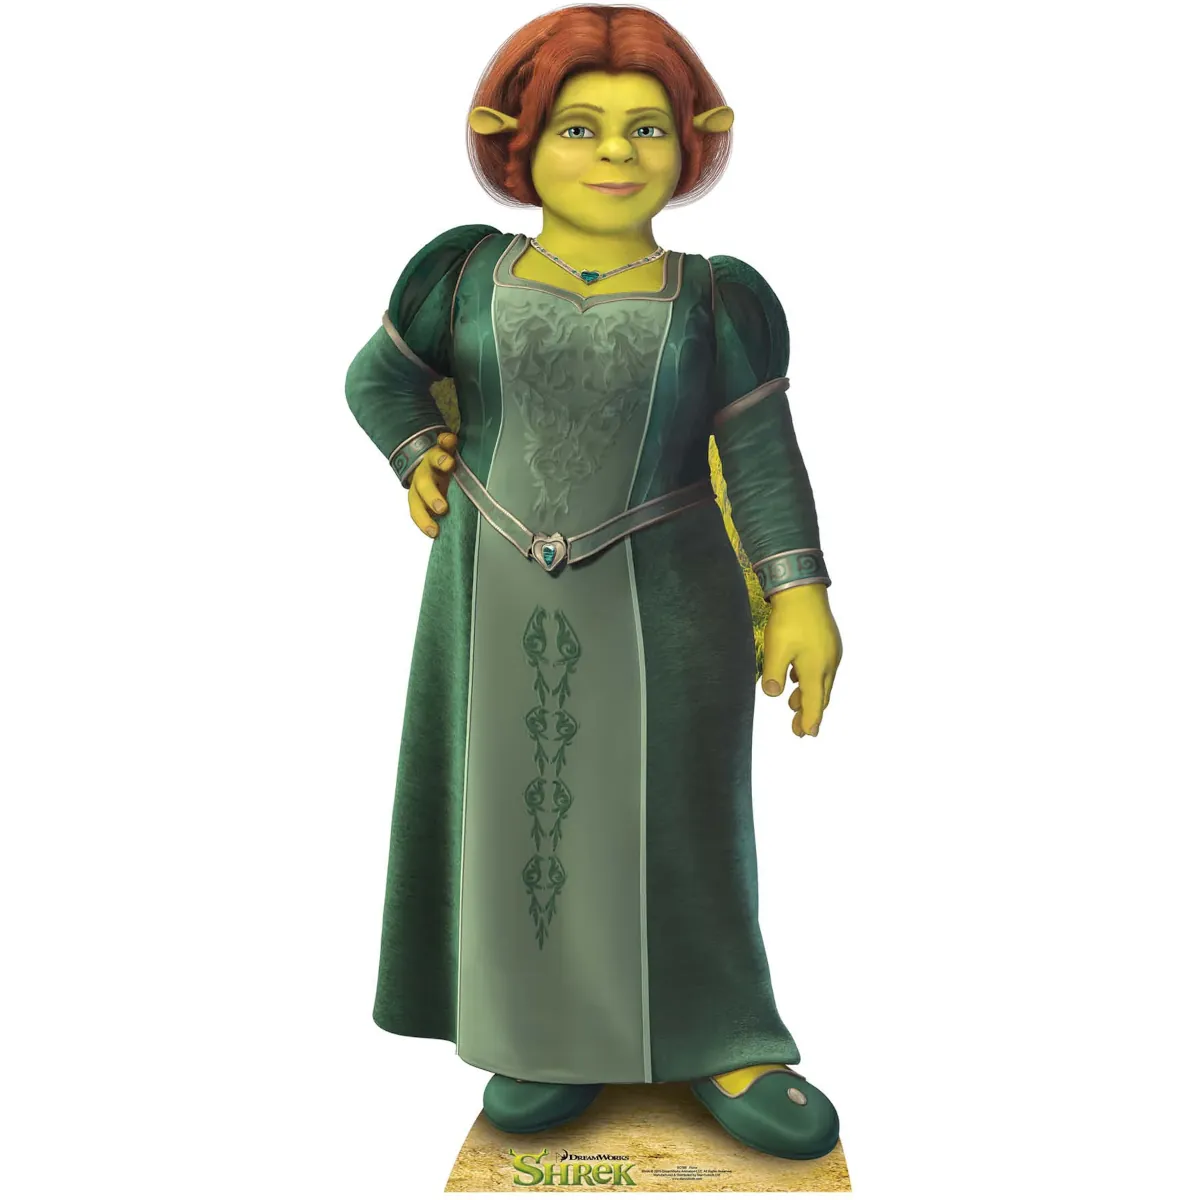 SC786 Princess Fiona (DreamWorks Animation Shrek) Official Lifesize Cardboard Cutout Standee Front